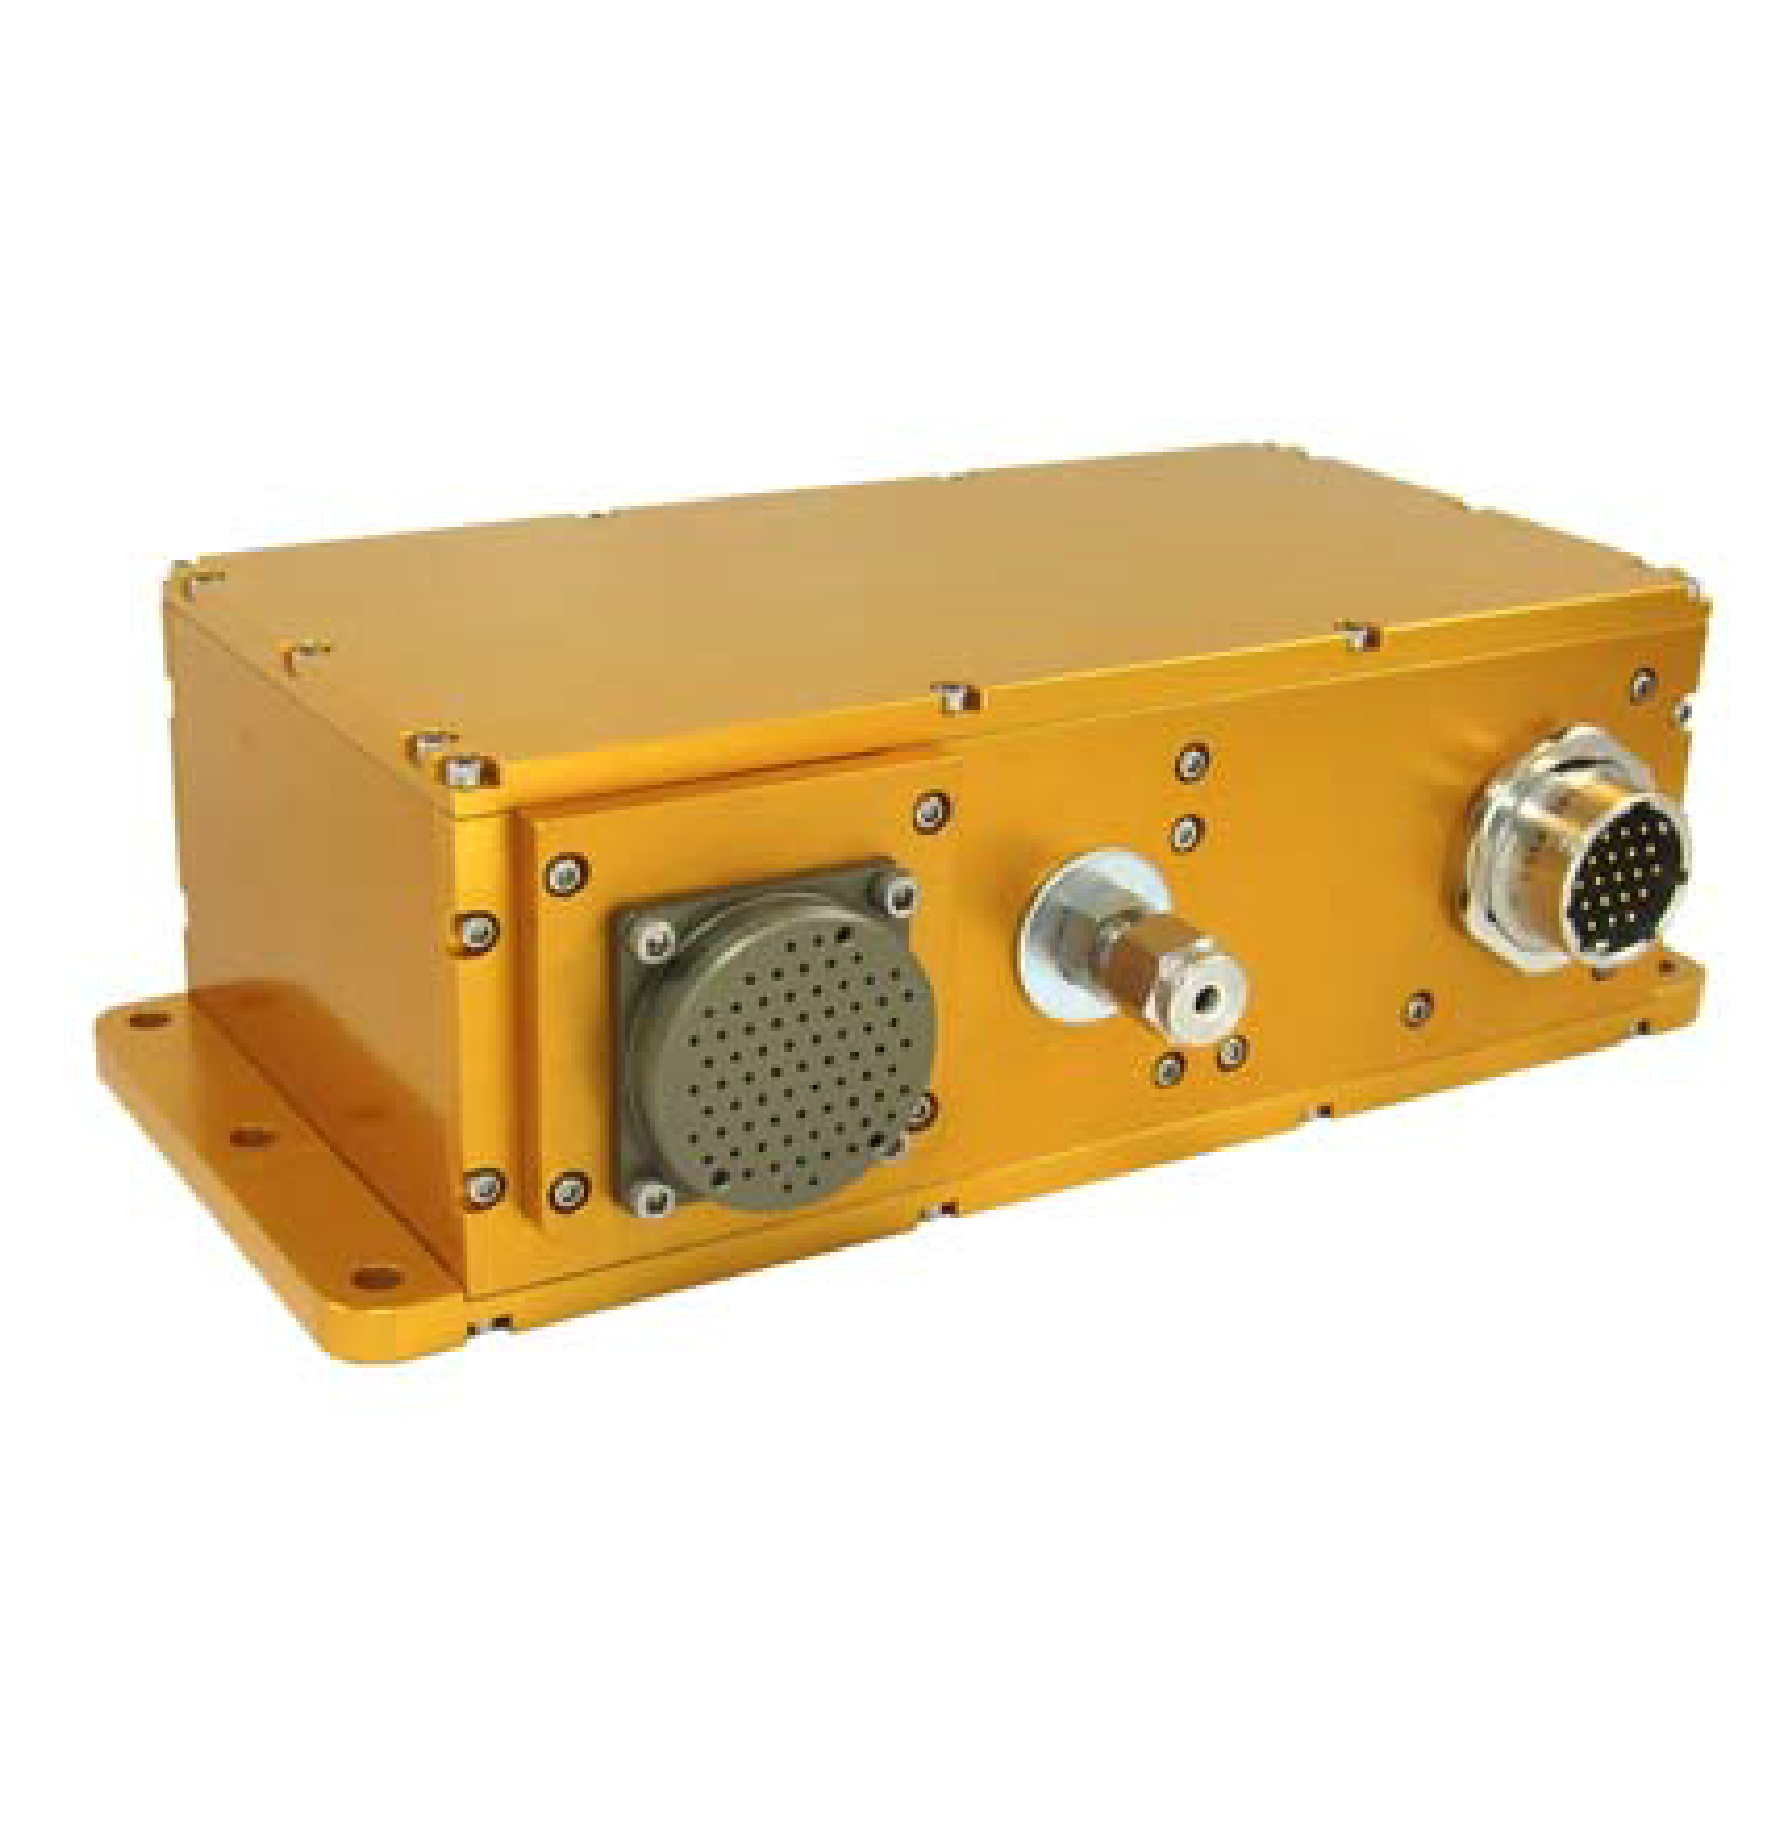 KMPS-2 Pressure Scanner for Flight Testing Applications